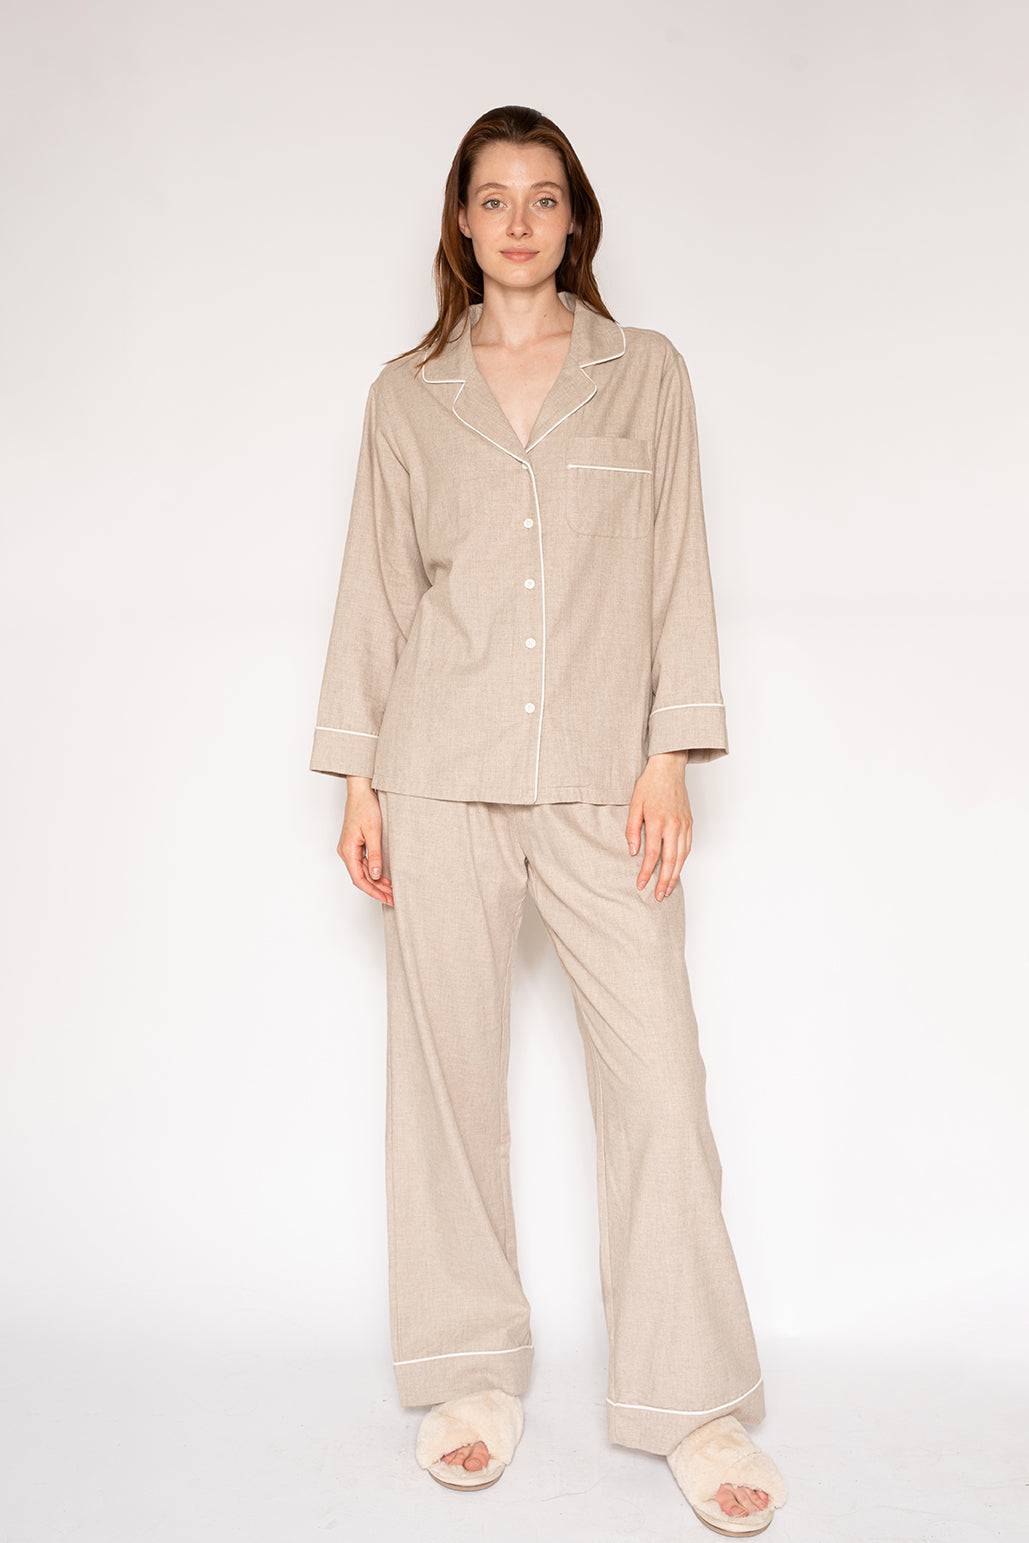 Women's Long Sleeve Bamboo Pajama Set - Cozy Earth